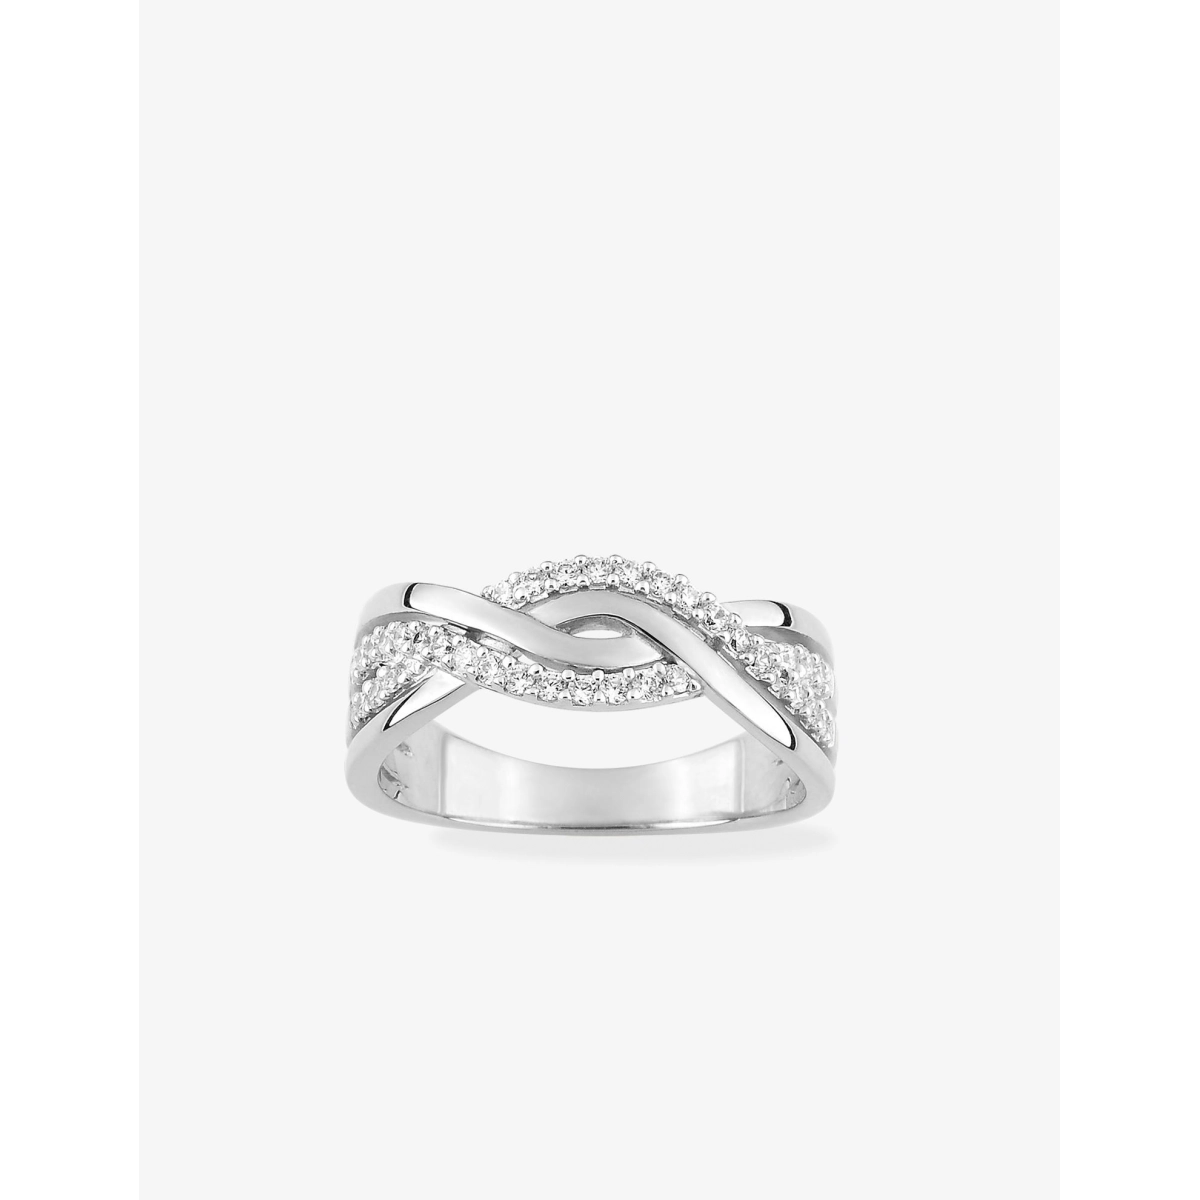 Ring w. cz rh925 Silver Lua Blanca  450163.9 - Size 53